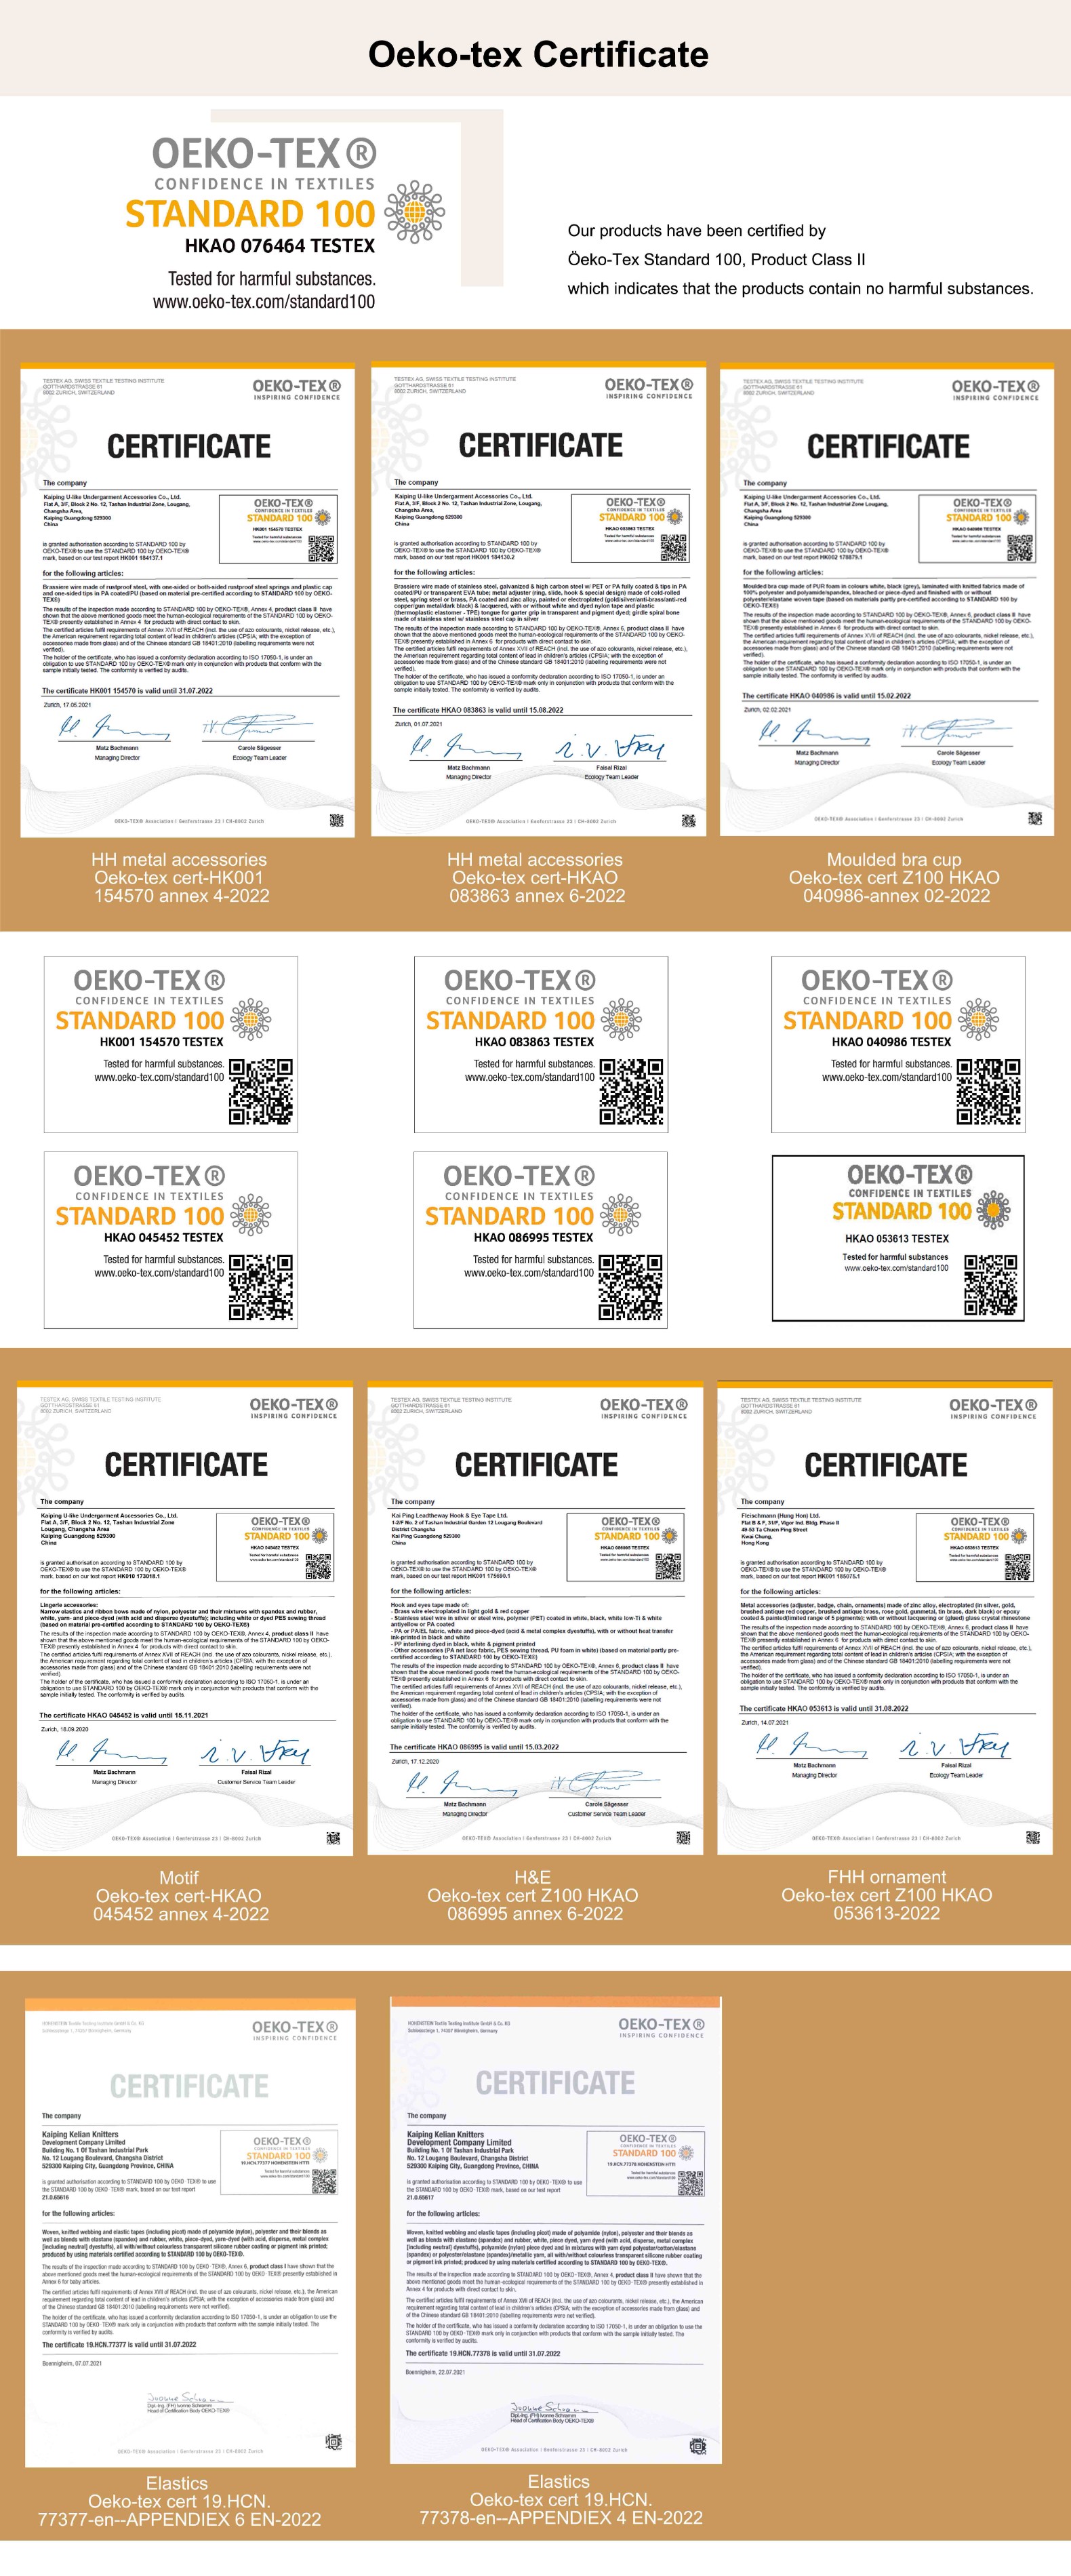 ISO14001 SGS DQS OEKO-TEX STANDARD 100